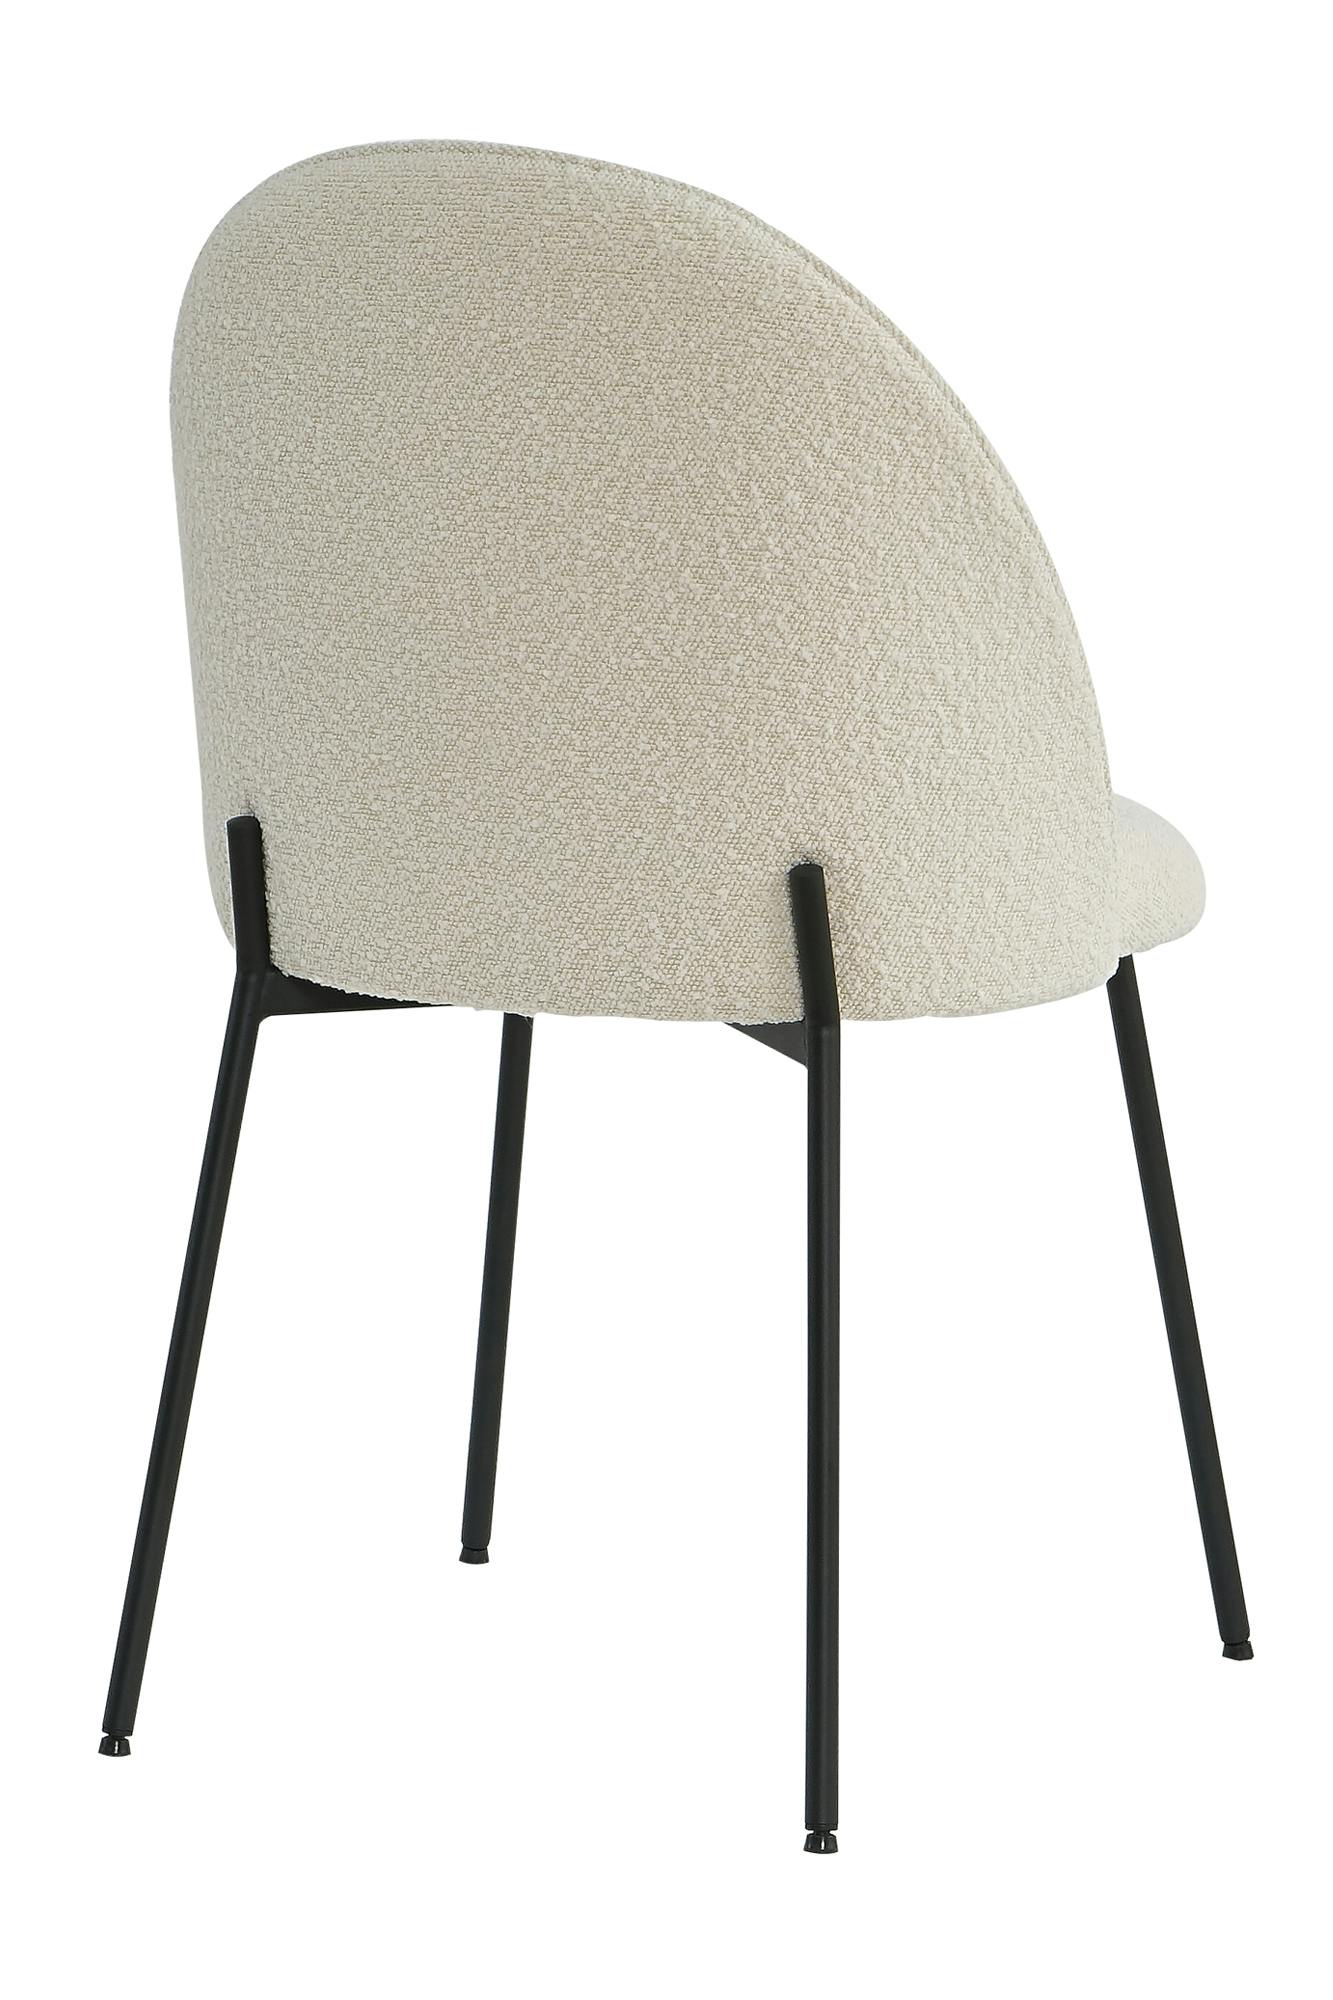 SIT Möbel Marktplatz | Chair gepolstert |Serie SIT&CHAIRS |02412-03 | Metall Tom Beine Pad B57xT54xH52cm 2er-Set beige| Tailor METRO | Stuhl | schwarz T-Bouclé